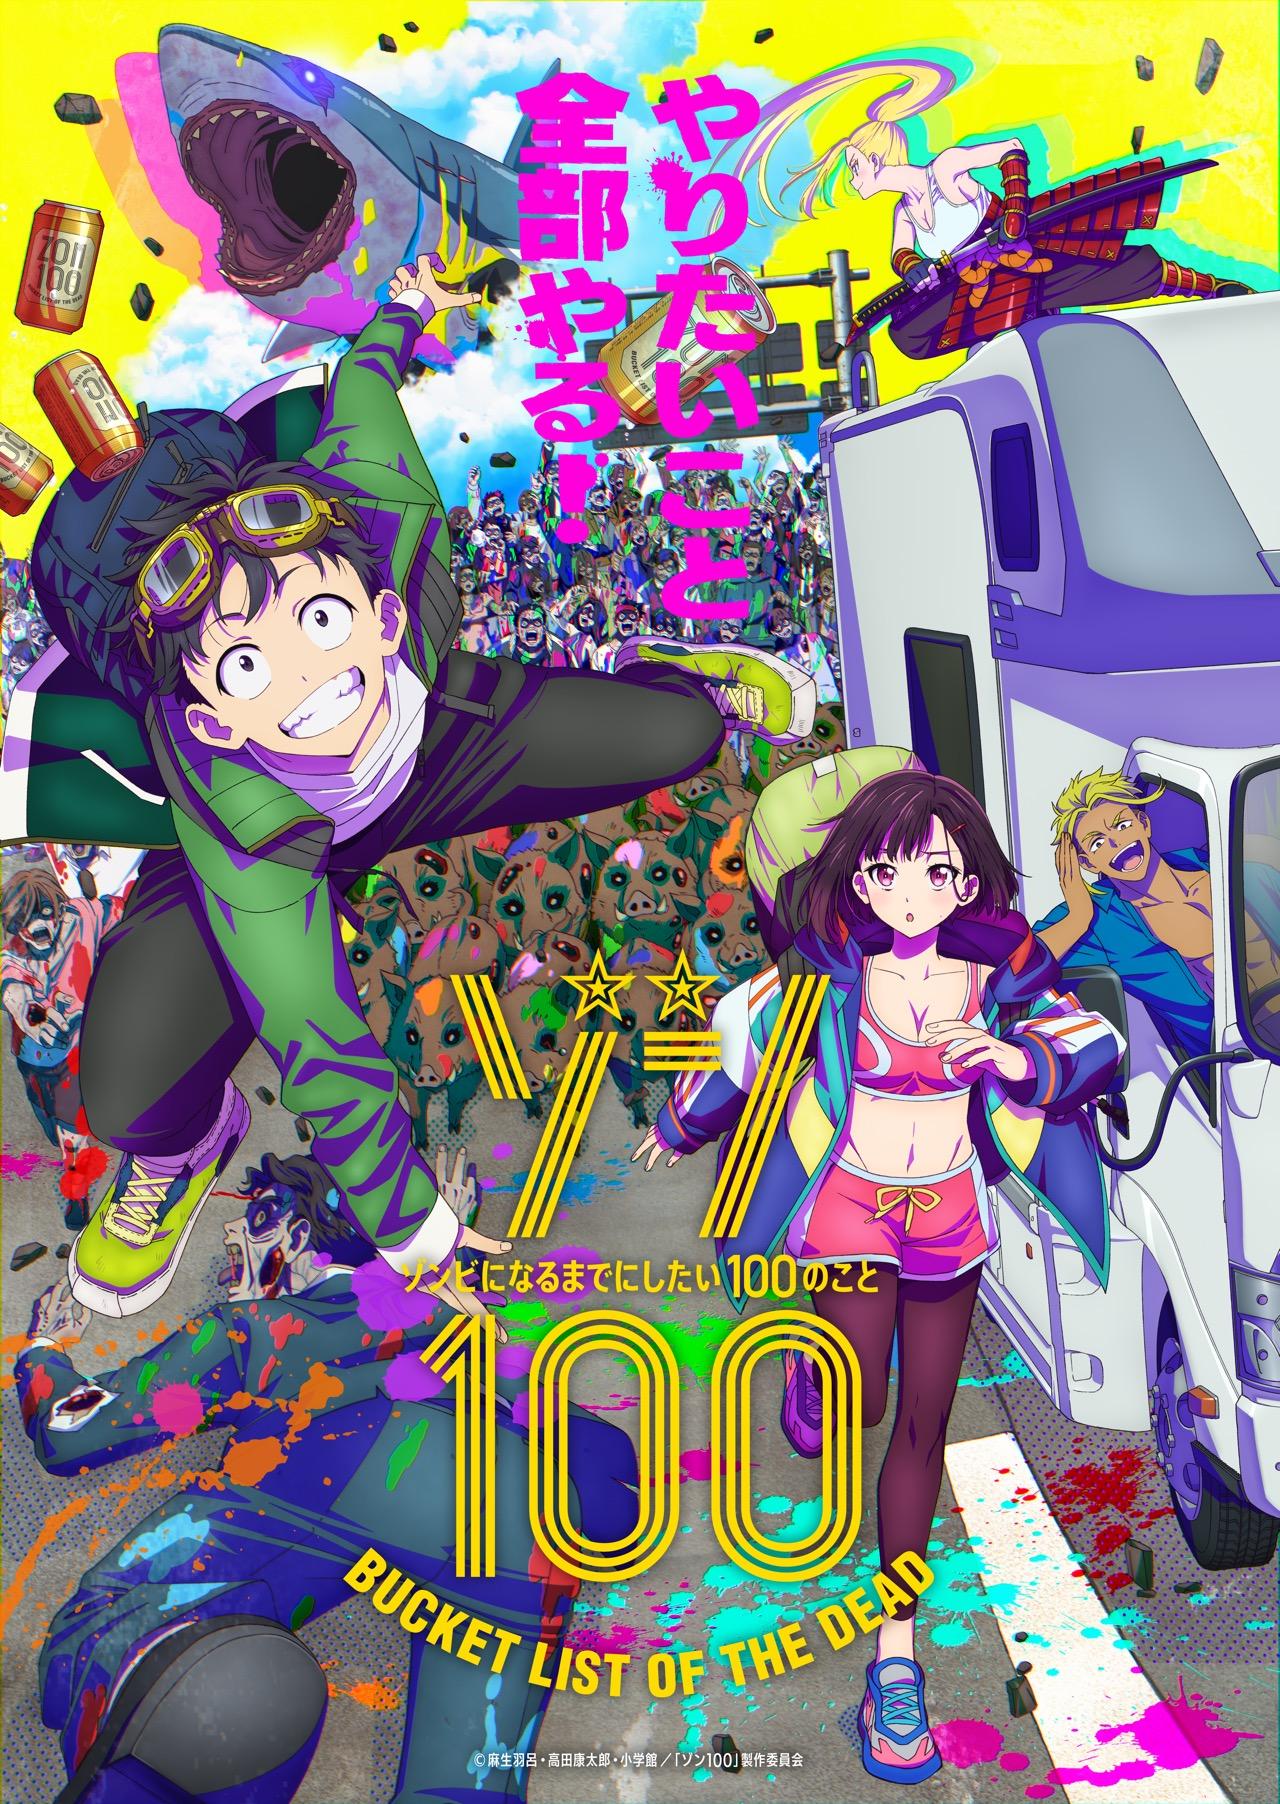 Zom 100 Bucket List of the Dead Anime Key Visual ranime